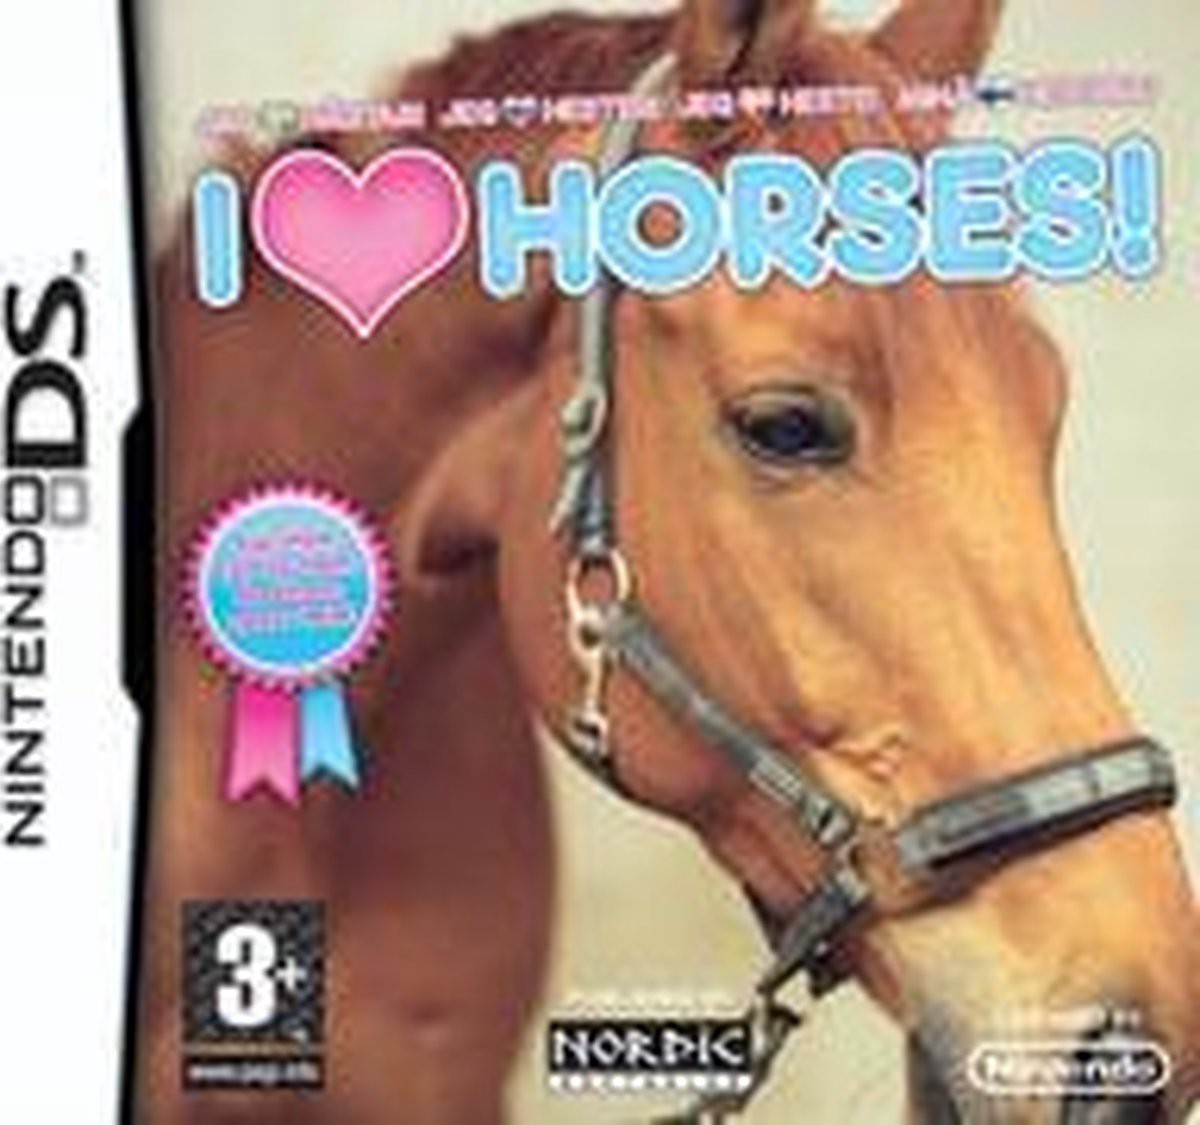 I Love Horses (Scandinavian Languages) - Nintendo DS Games